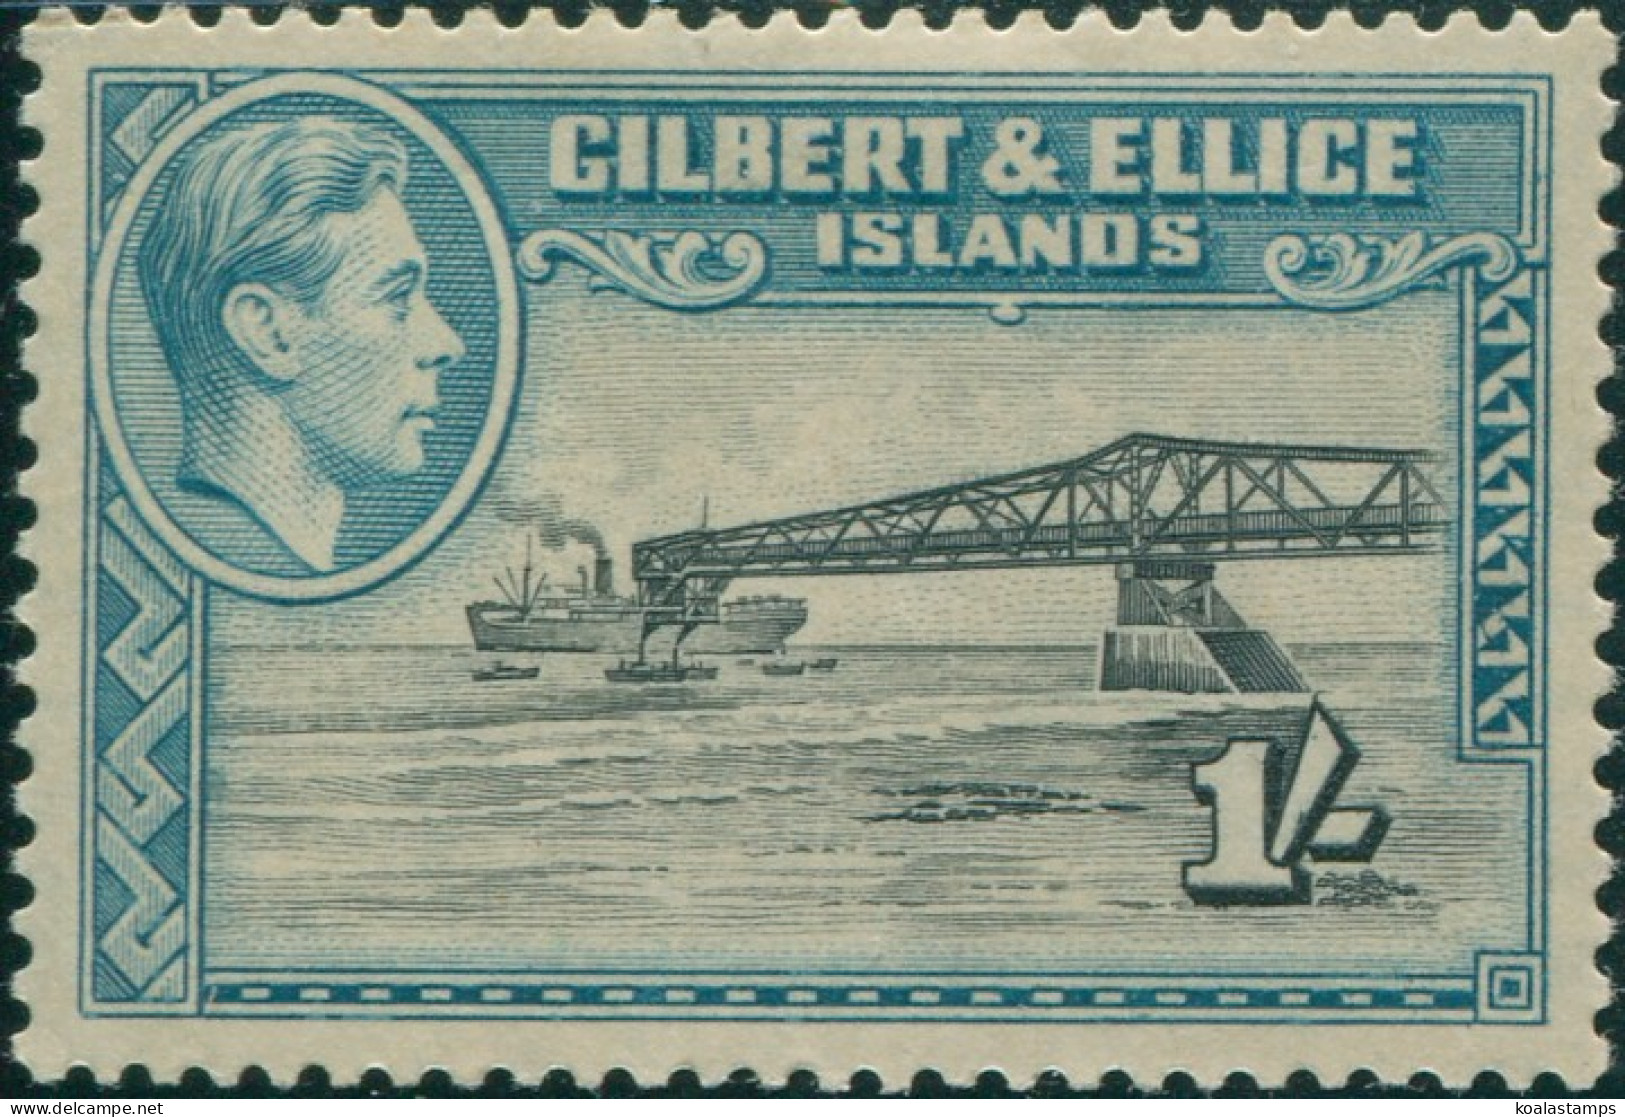 Gilbert & Ellice Islands 1939 SG51a 1/- Cantilever Jetty KGVI P12 MLH - Gilbert- En Ellice-eilanden (...-1979)